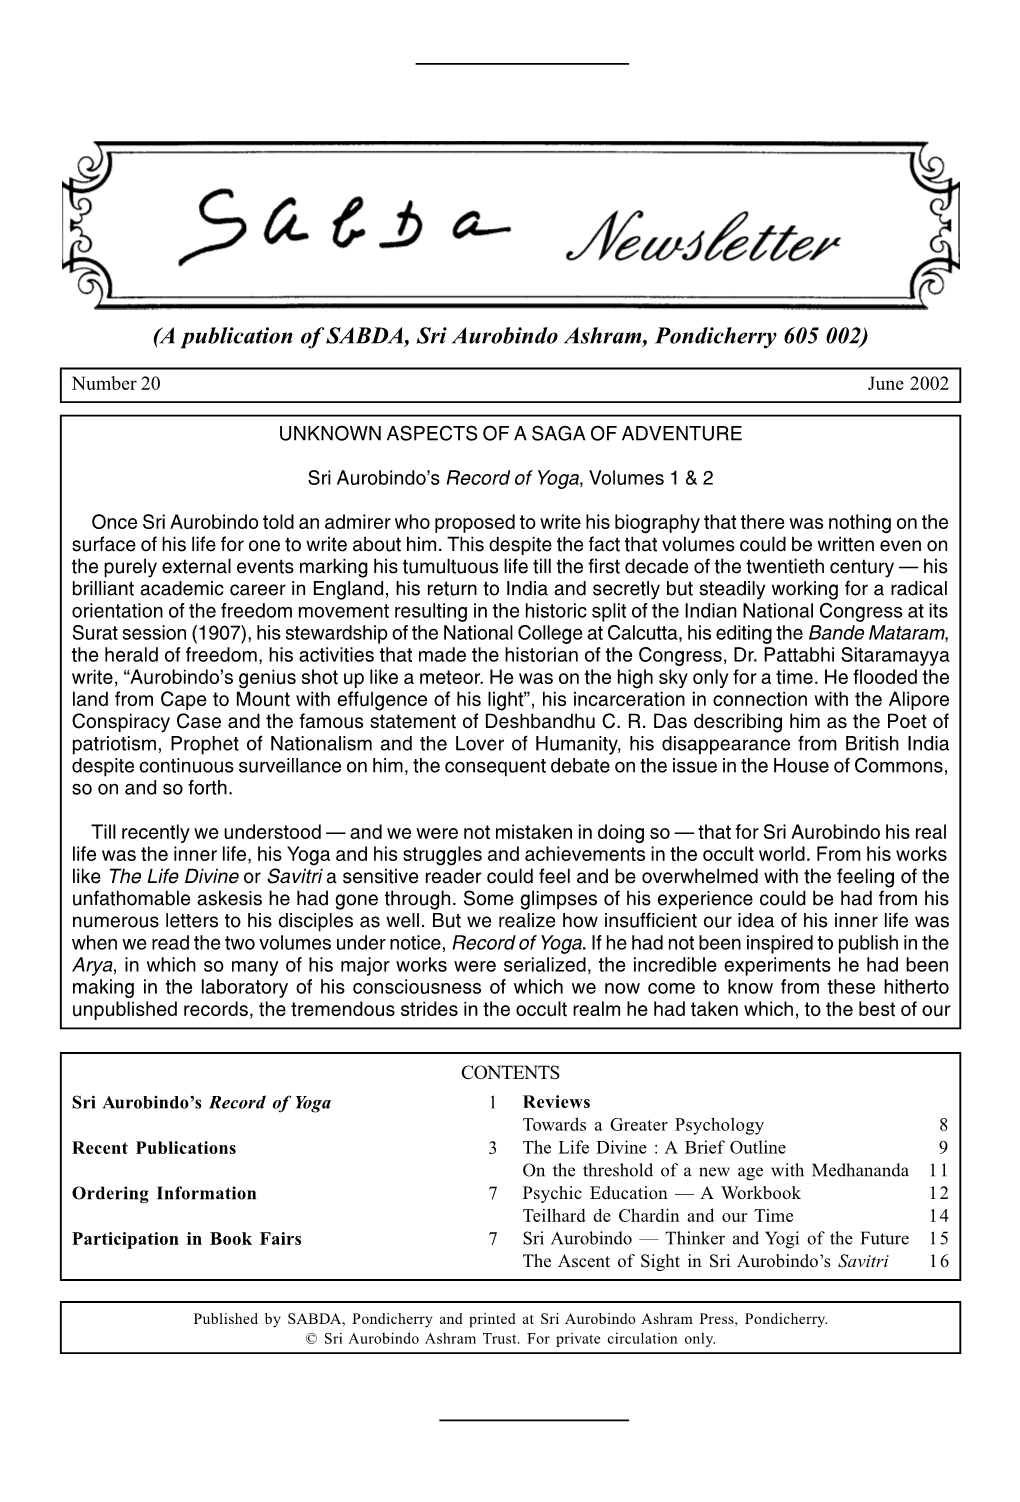 A Publication of SABDA, Sri Aurobindo Ashram, Pondicherry 605 002